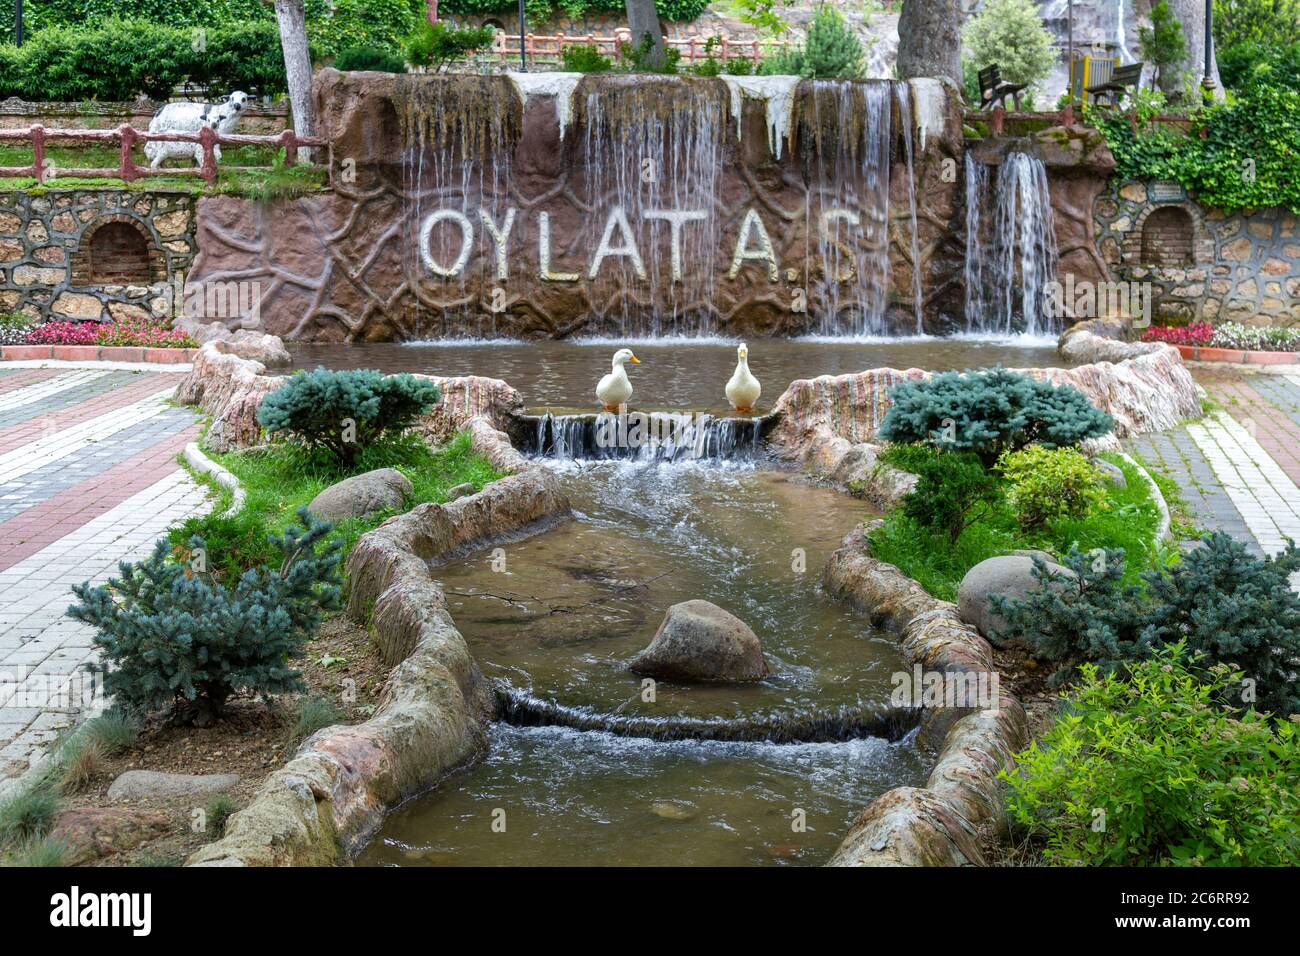 Oylat, Bursa / Türkei - Juni 26 2020: Oylat Thermalbad Stadt Stockfoto